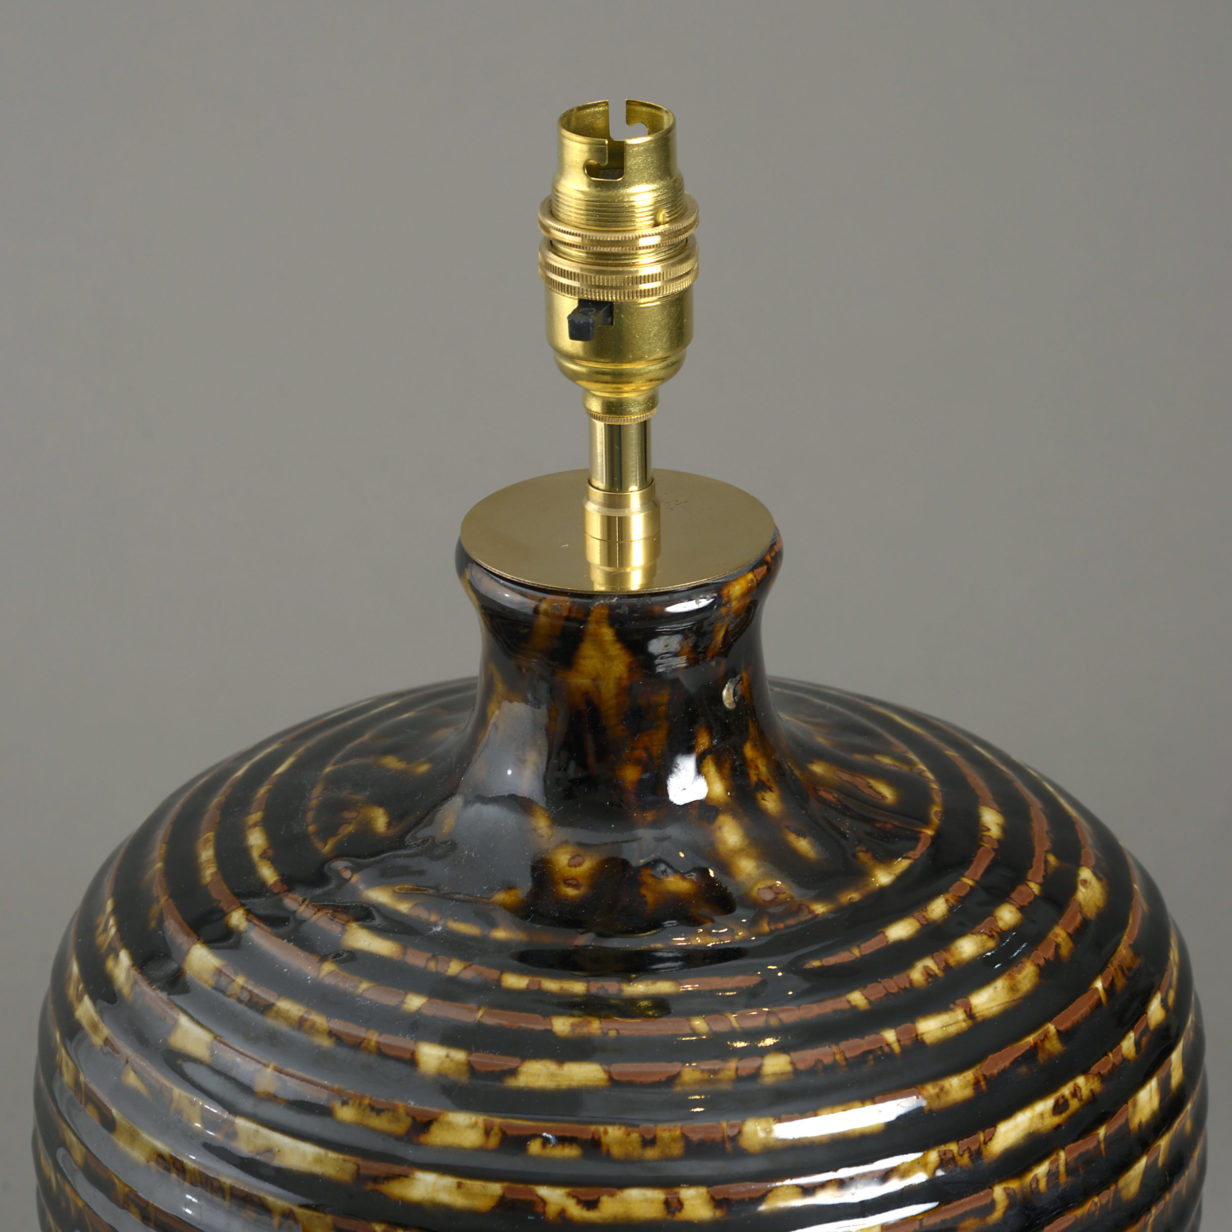 A tortoiseshell glazed ceramic vase lamp